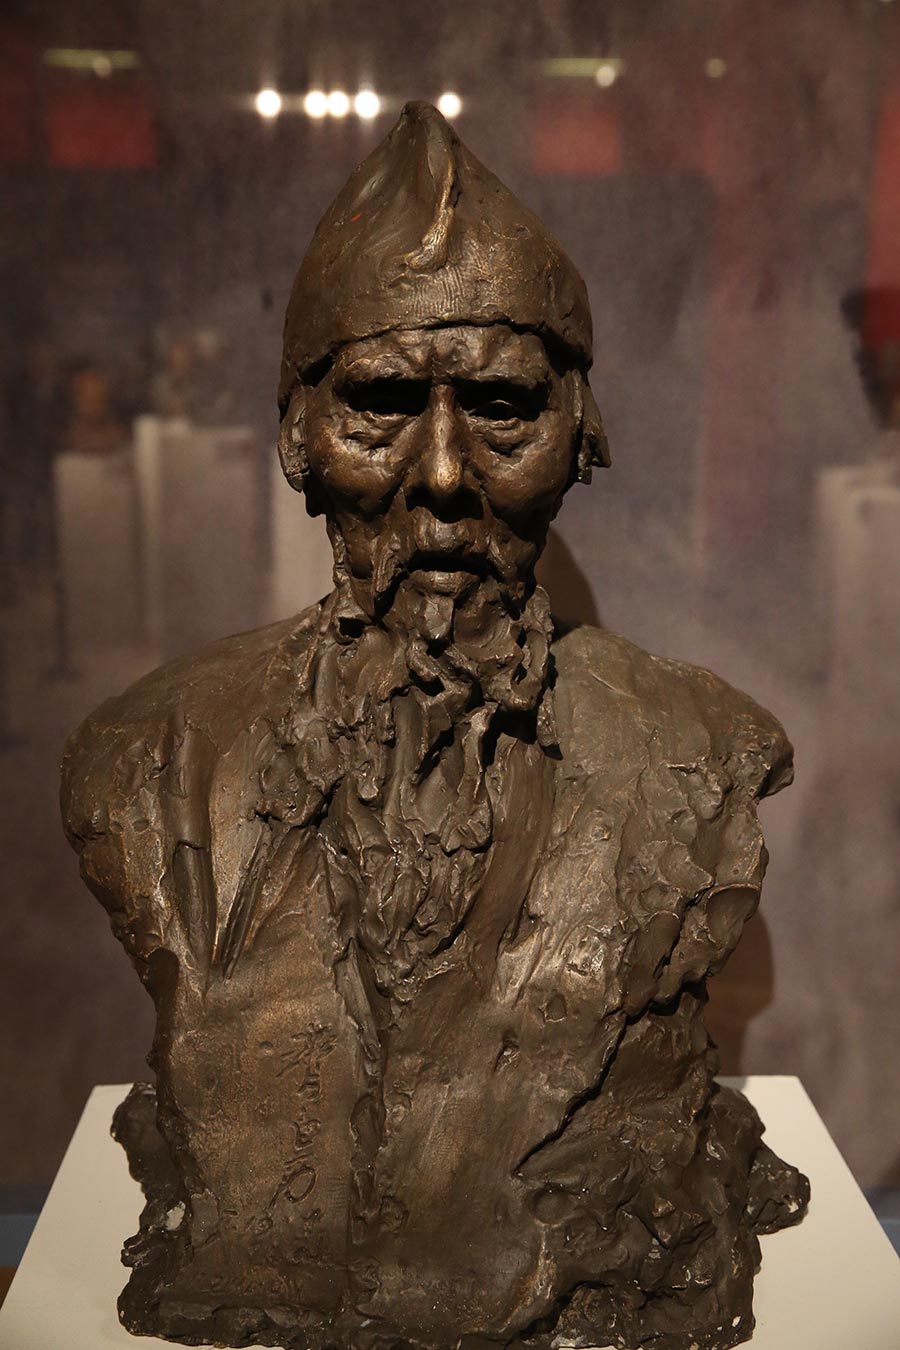 Works by Belarusian sculptors go on display in Beijing